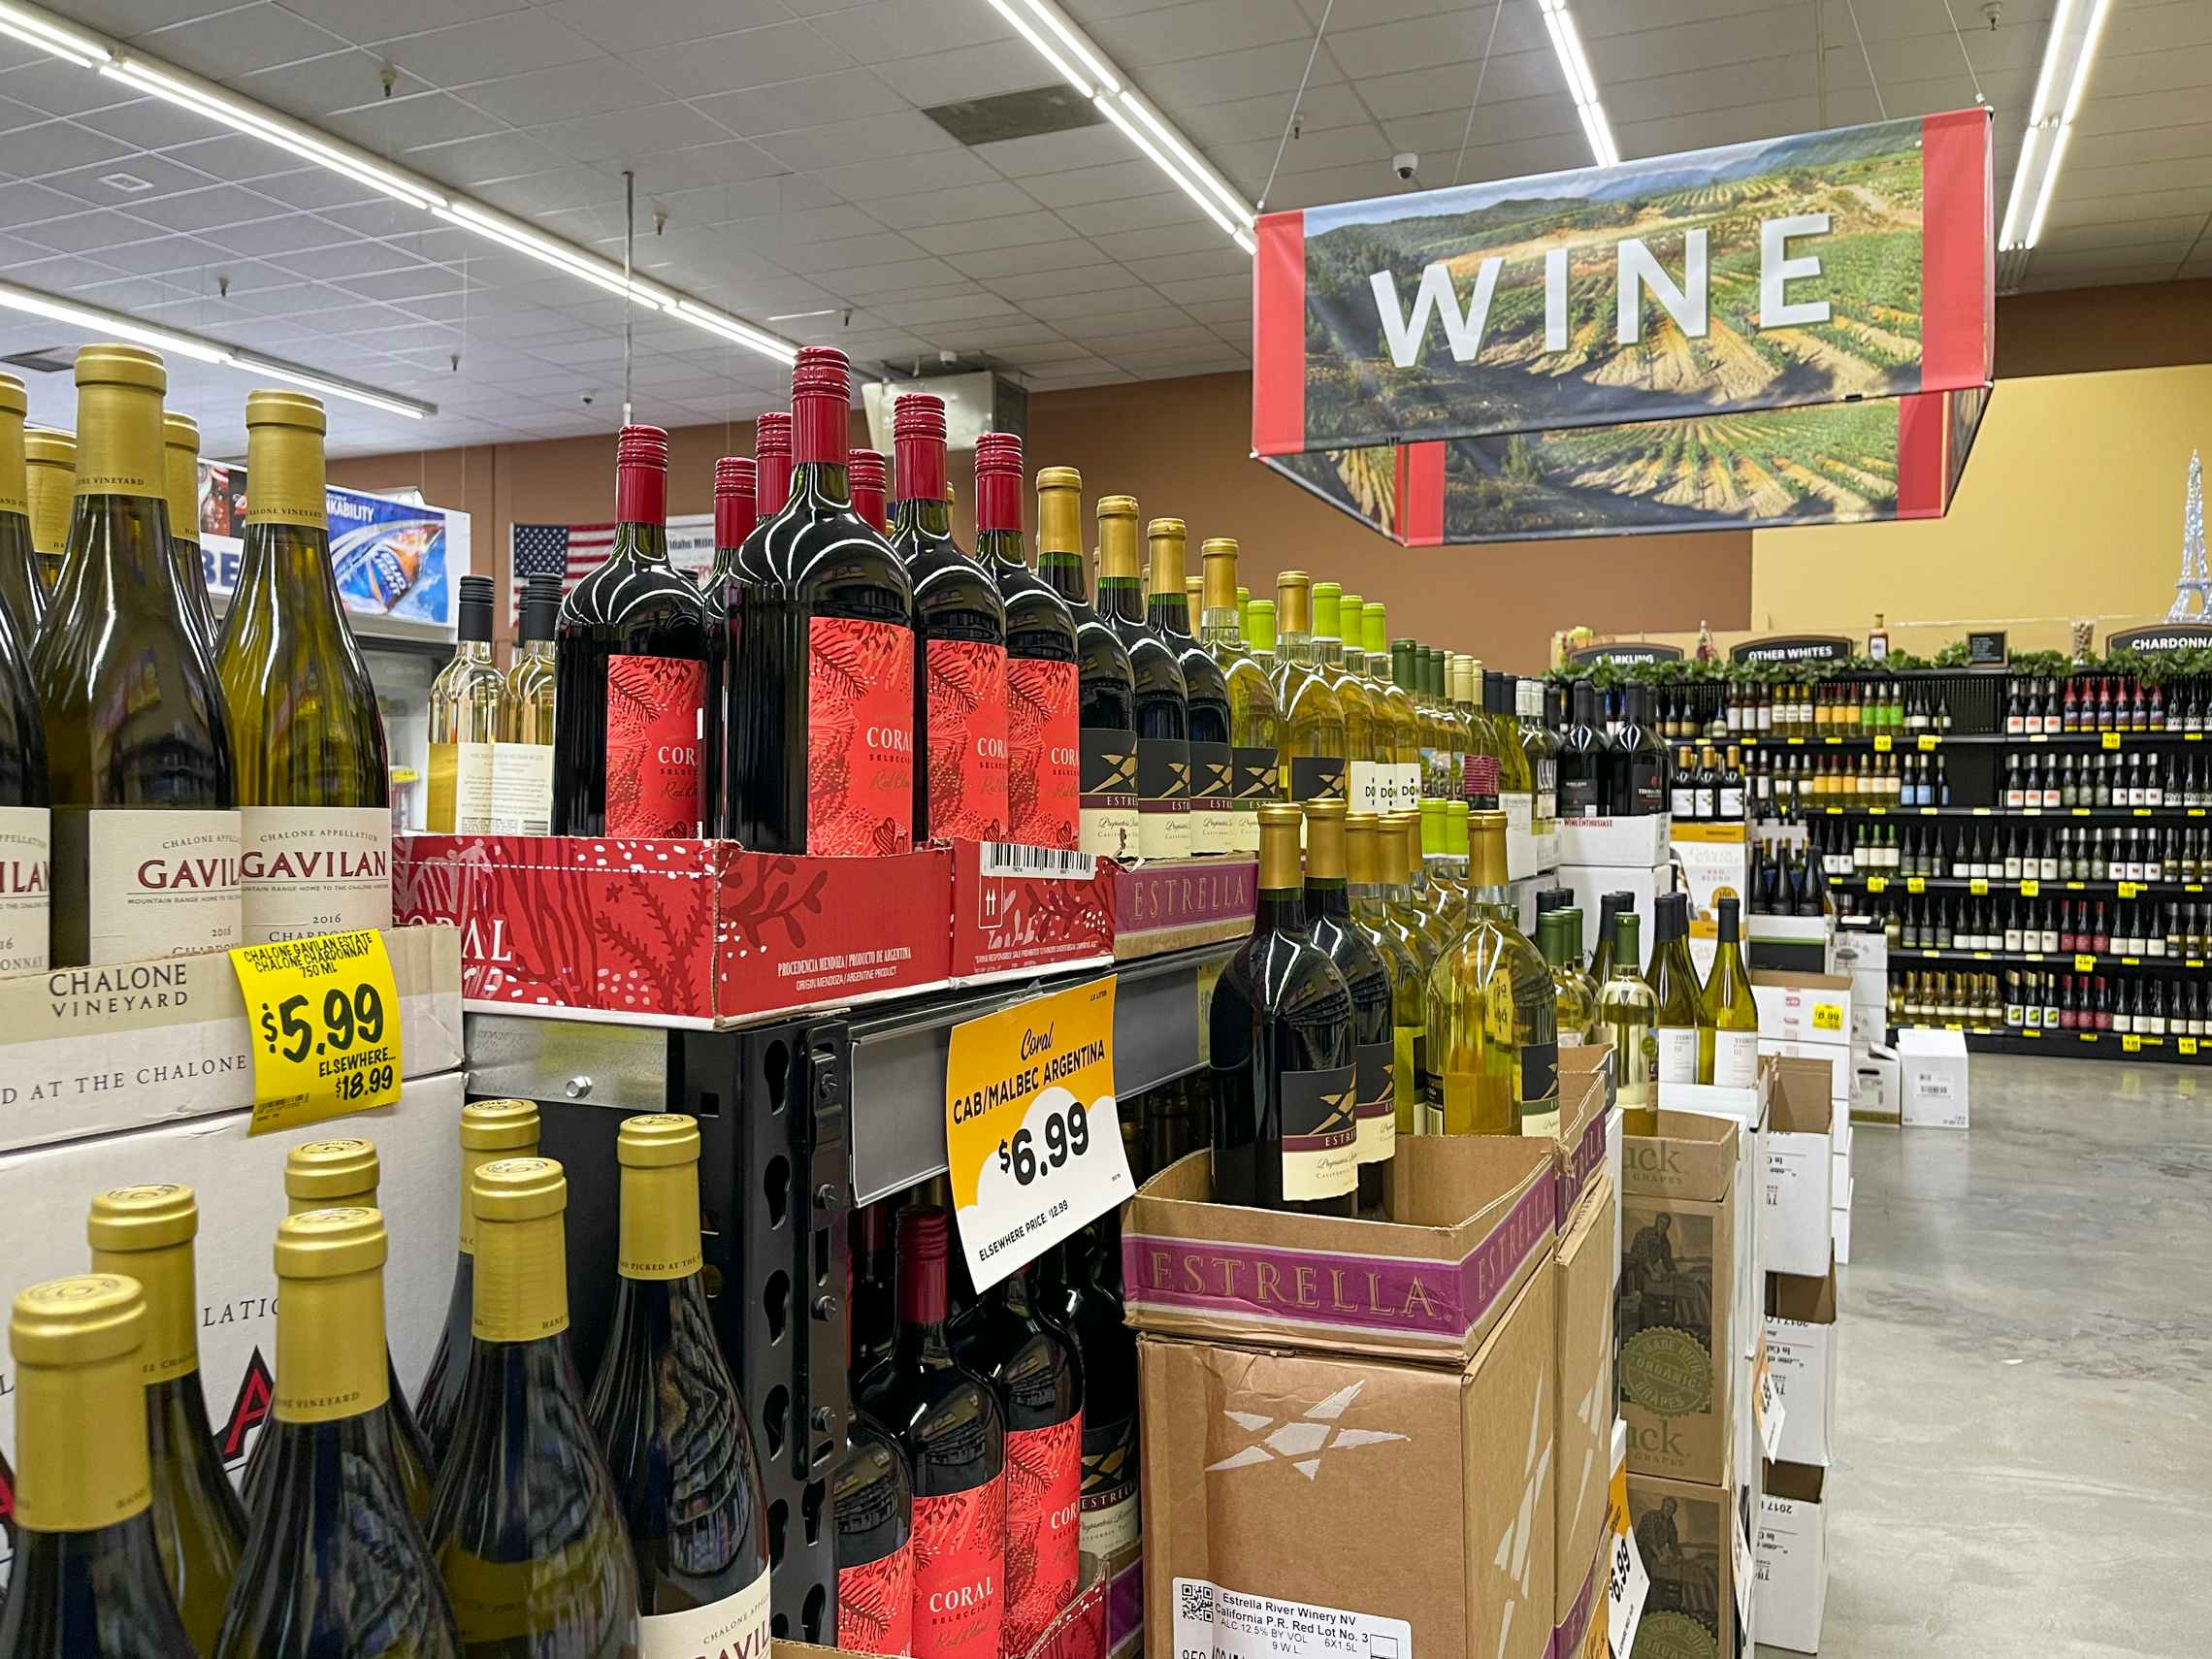 Bottles of Wine on shelves inside Grocery Outlet.